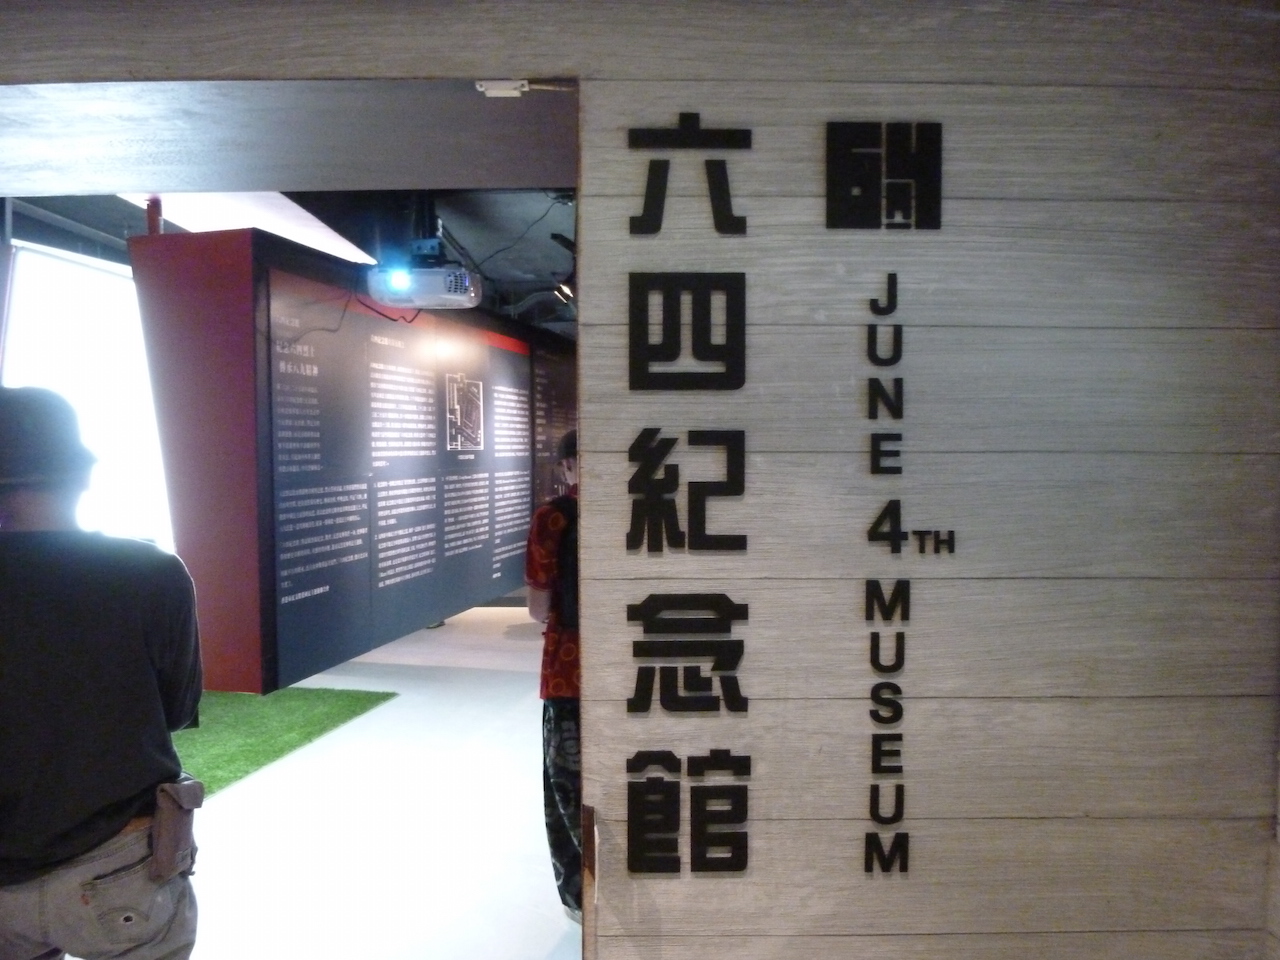 The permanent June 4th Museum (photo via Wikipedia)